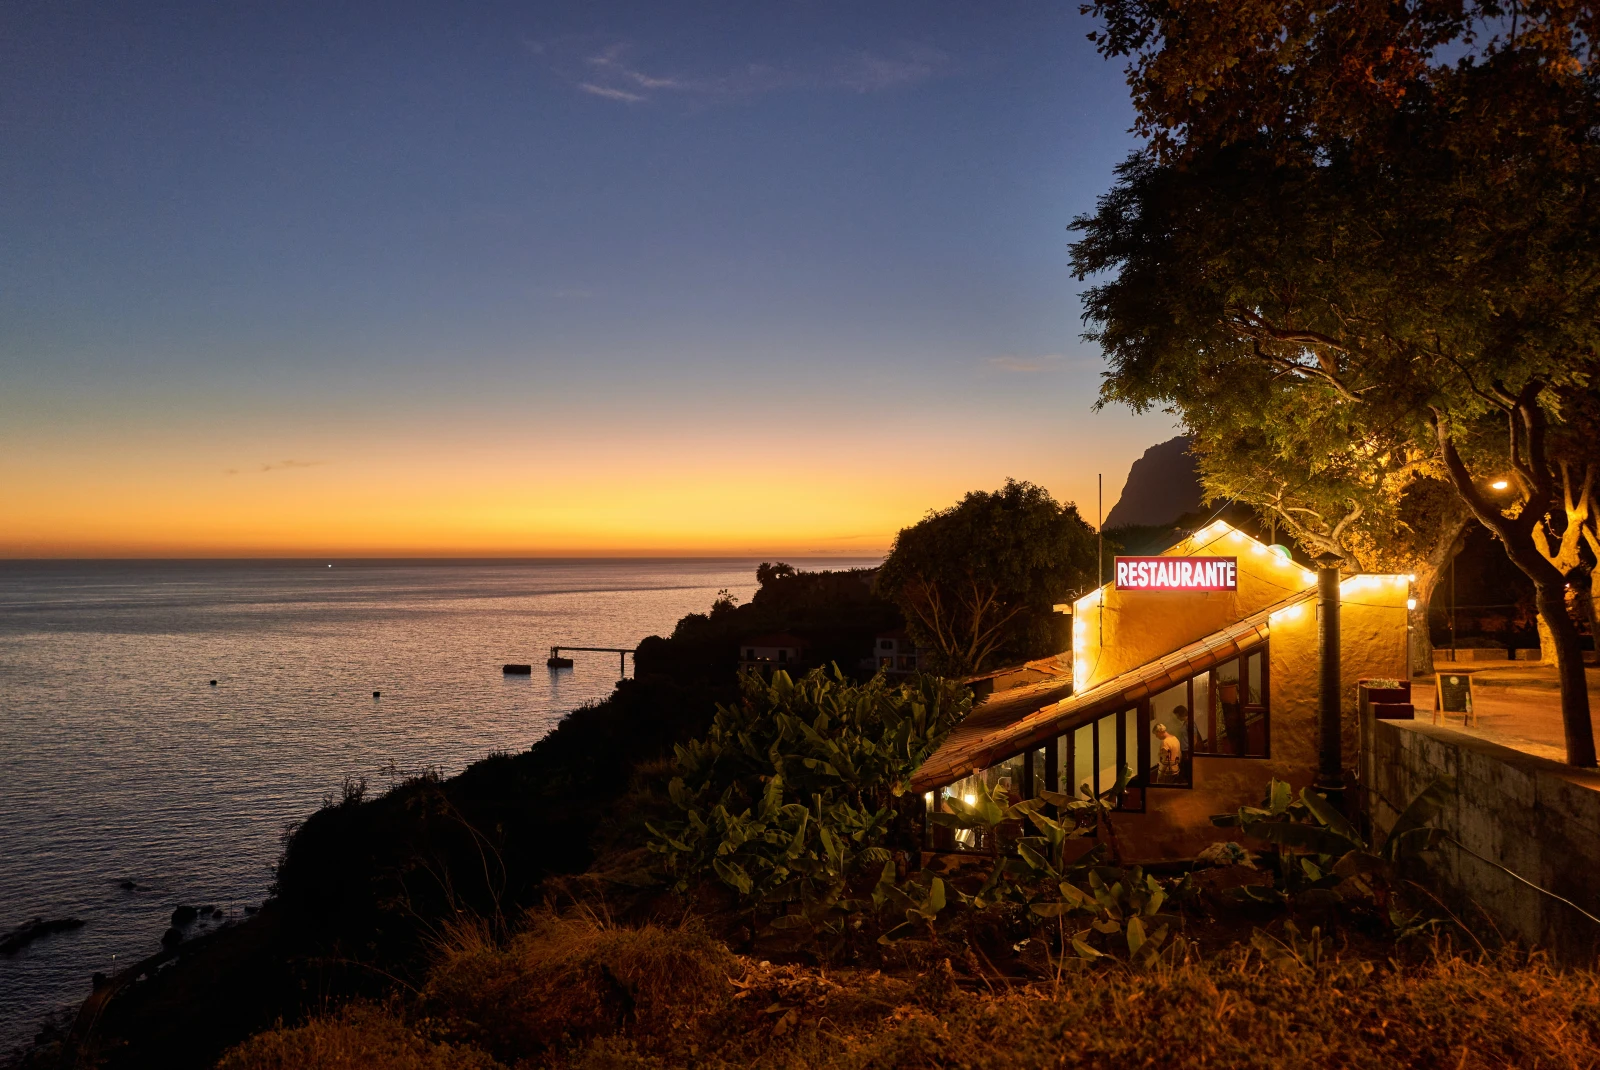 Restaurant at sunset on an island. 